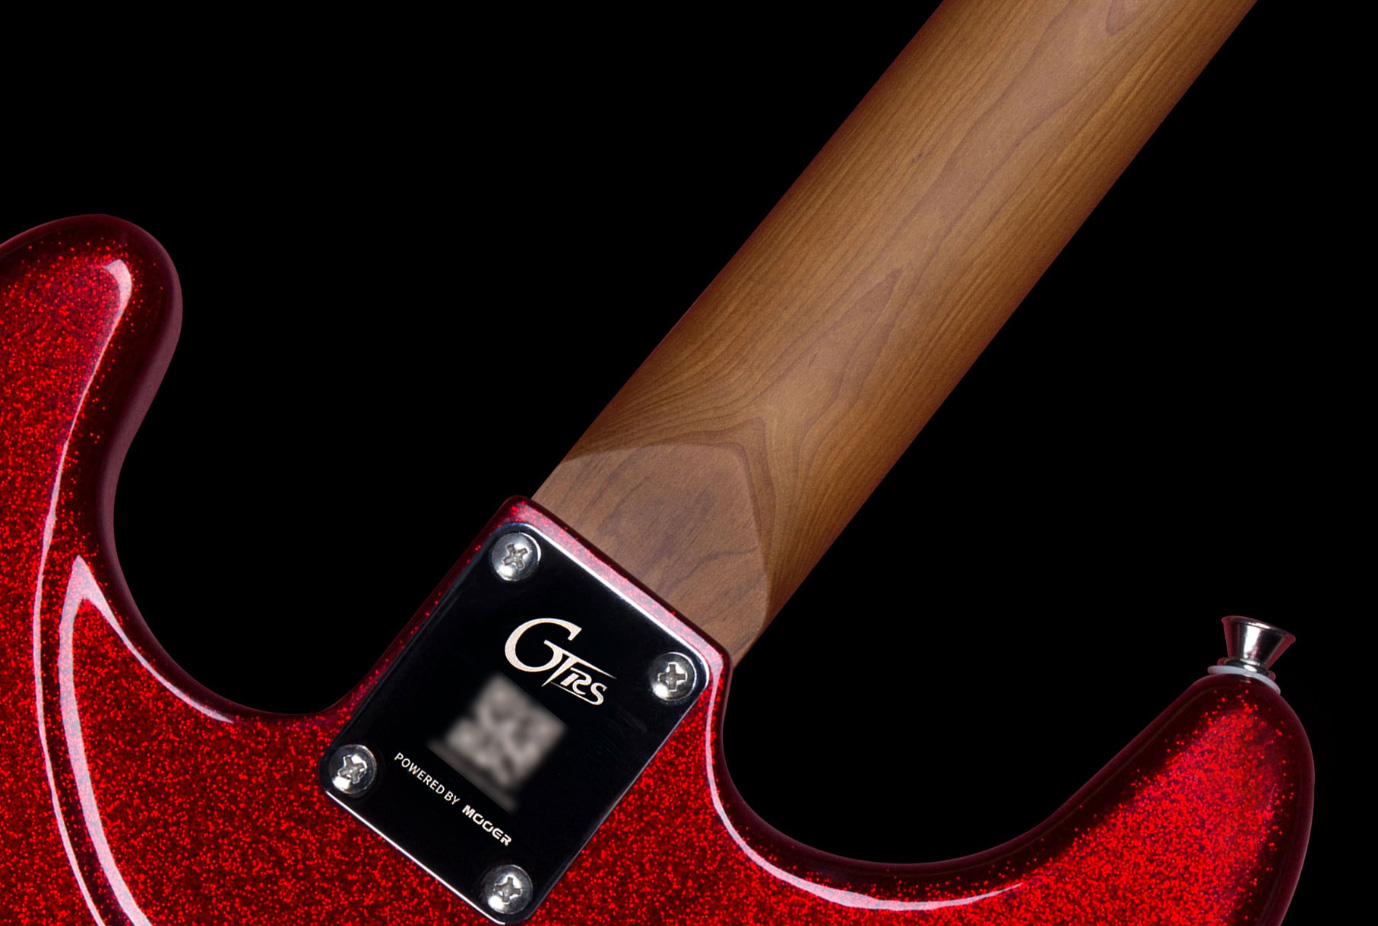 Mooer Gtrs S800 Hss Trem Rw - Metal Red - Modeling guitar - Variation 2